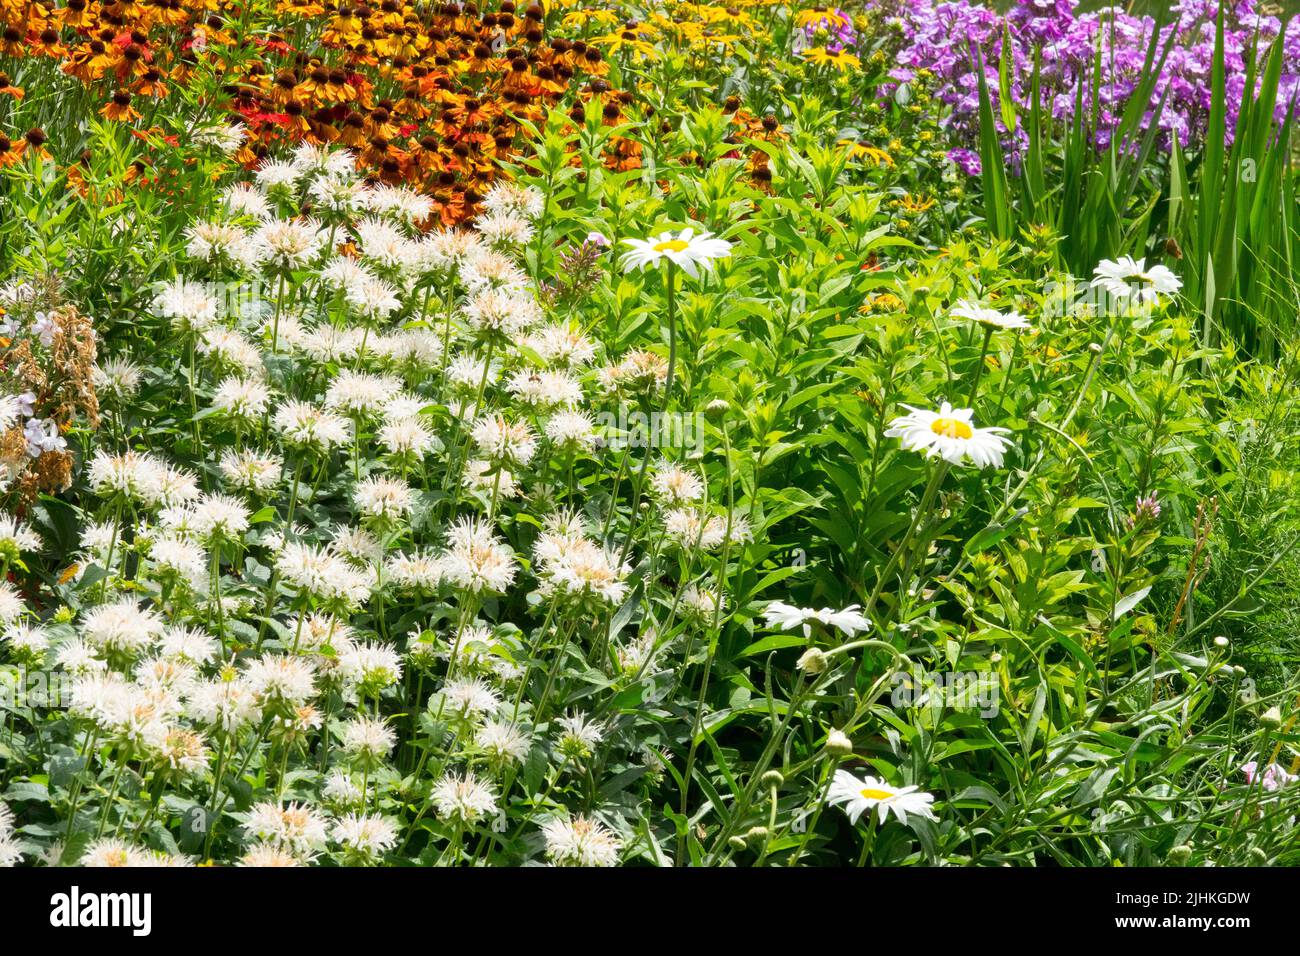 Colourful summer border garden, mix flowers Monarda Helen's flower Daisy Garden Phlox White Shasta Daisy Leucanthemum superbum Monarda Snow White Stock Photo